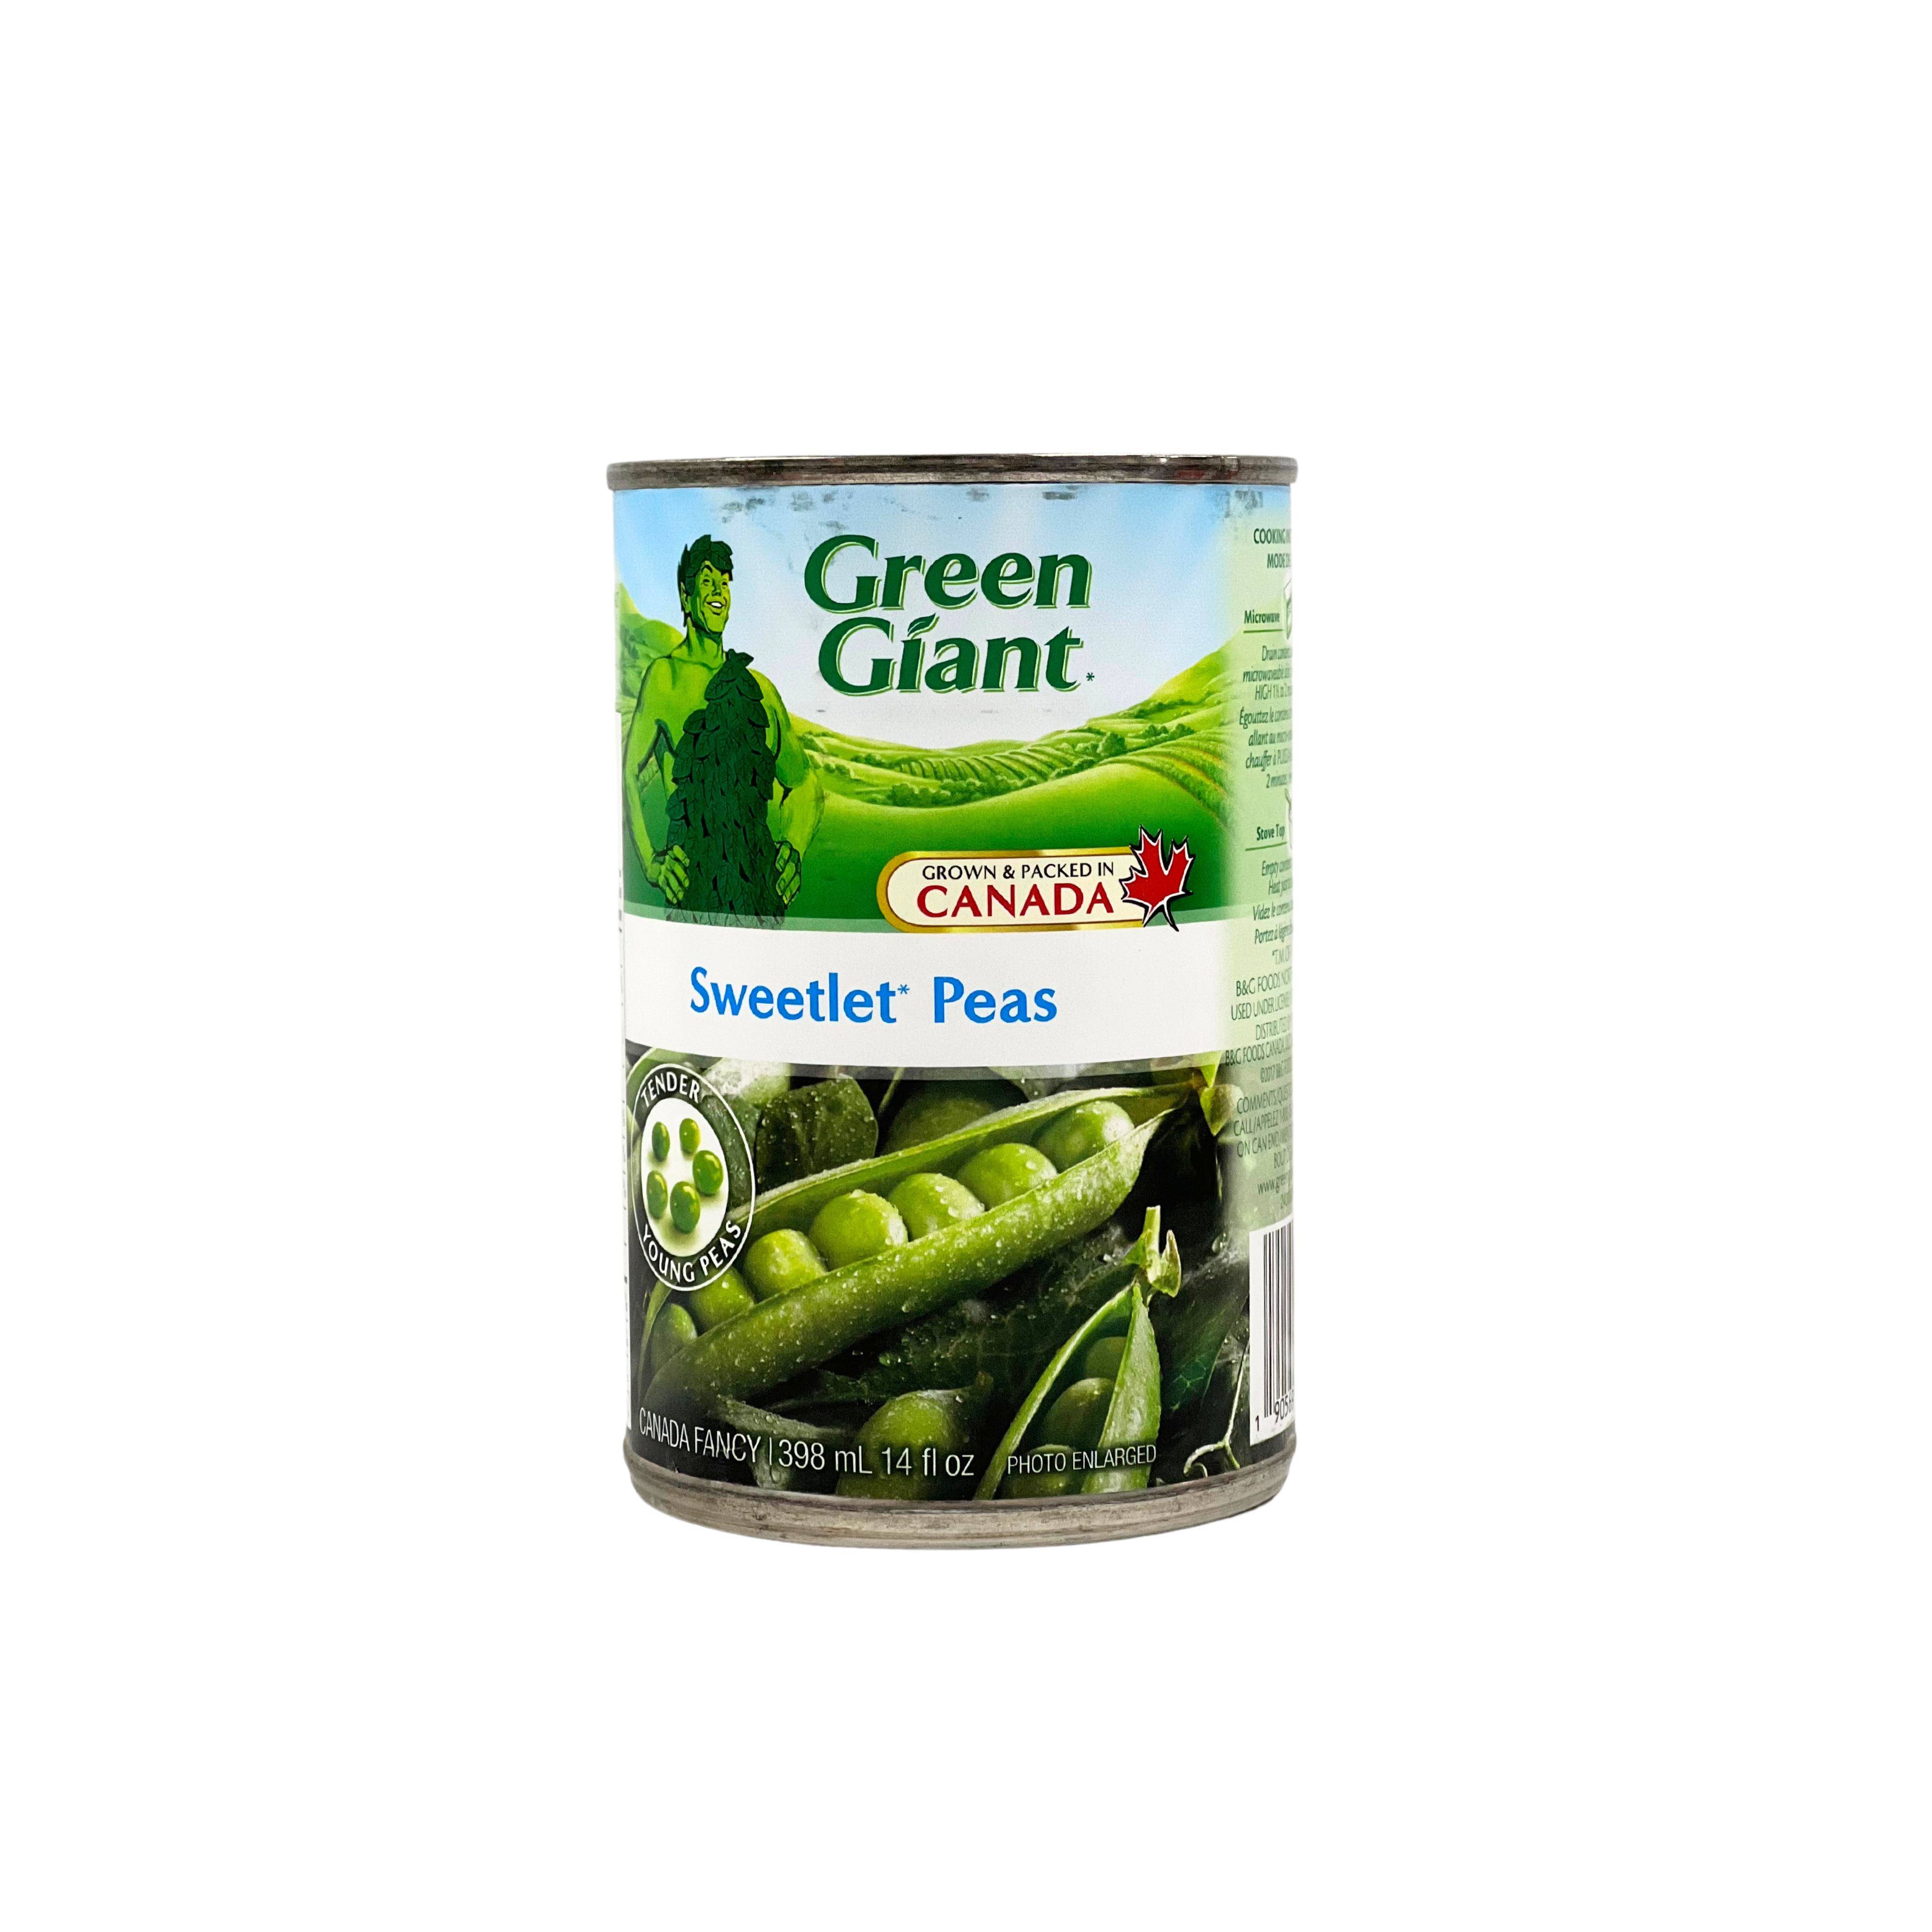 Green Giant Sweetlet Peas 398ml